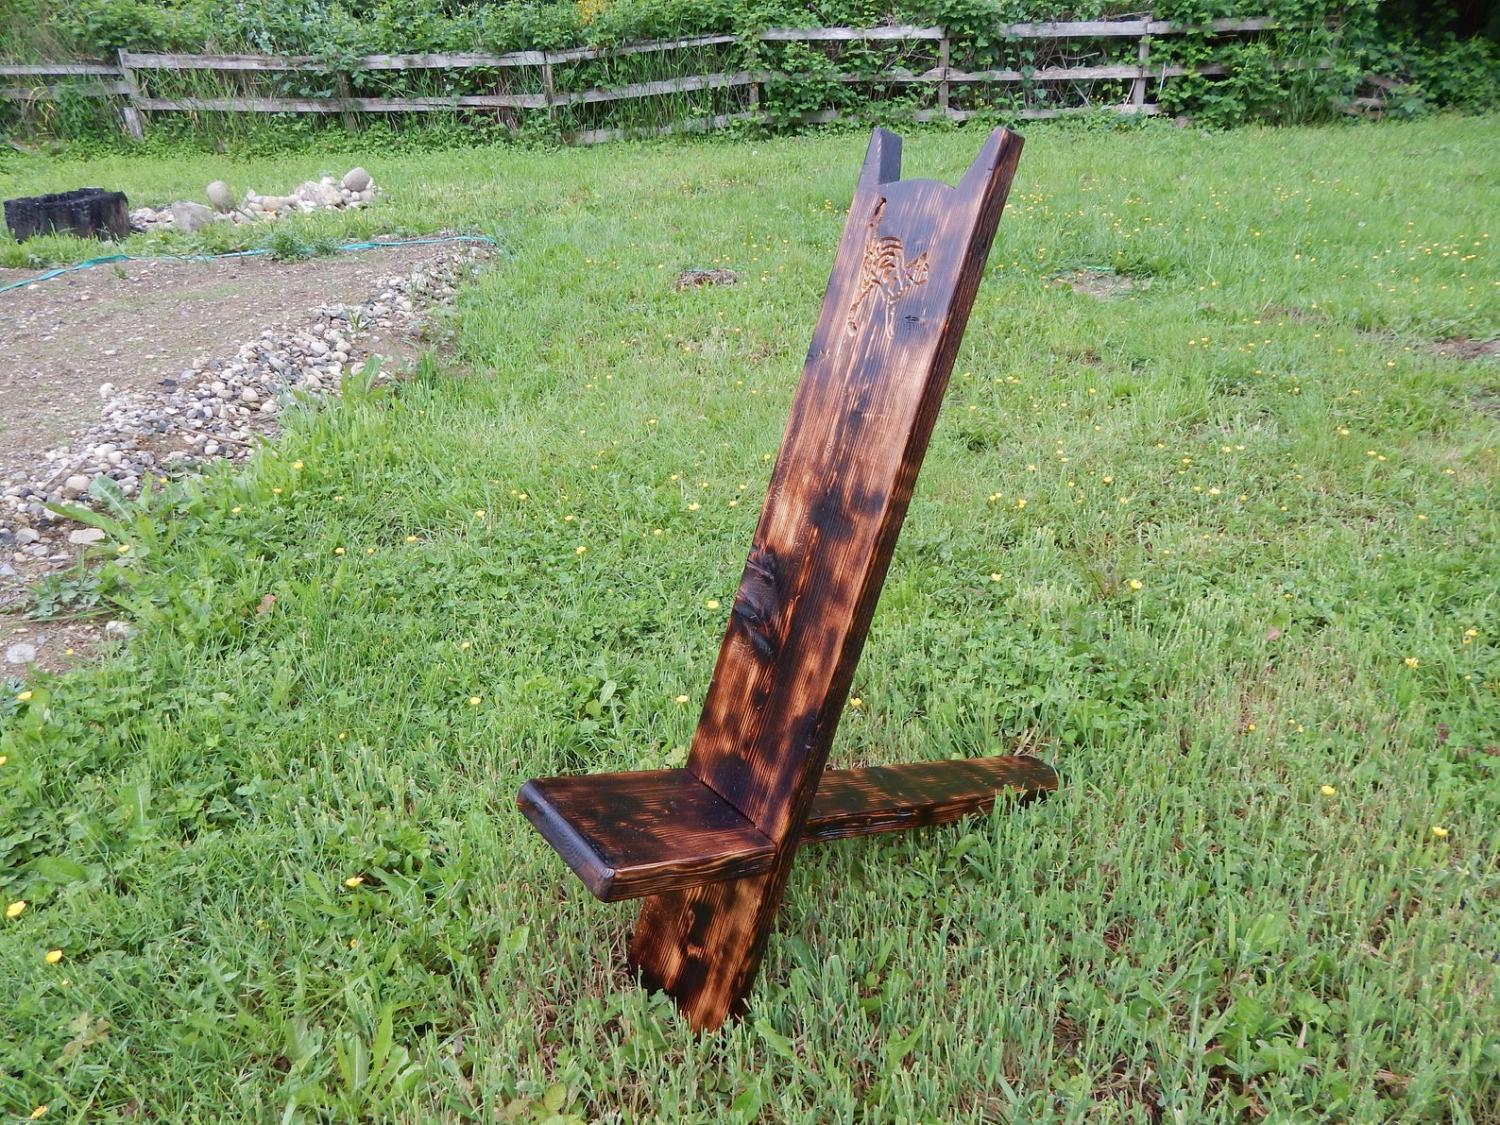 Best viking chair designs - DIY Viking chair and bog chair design inspiration